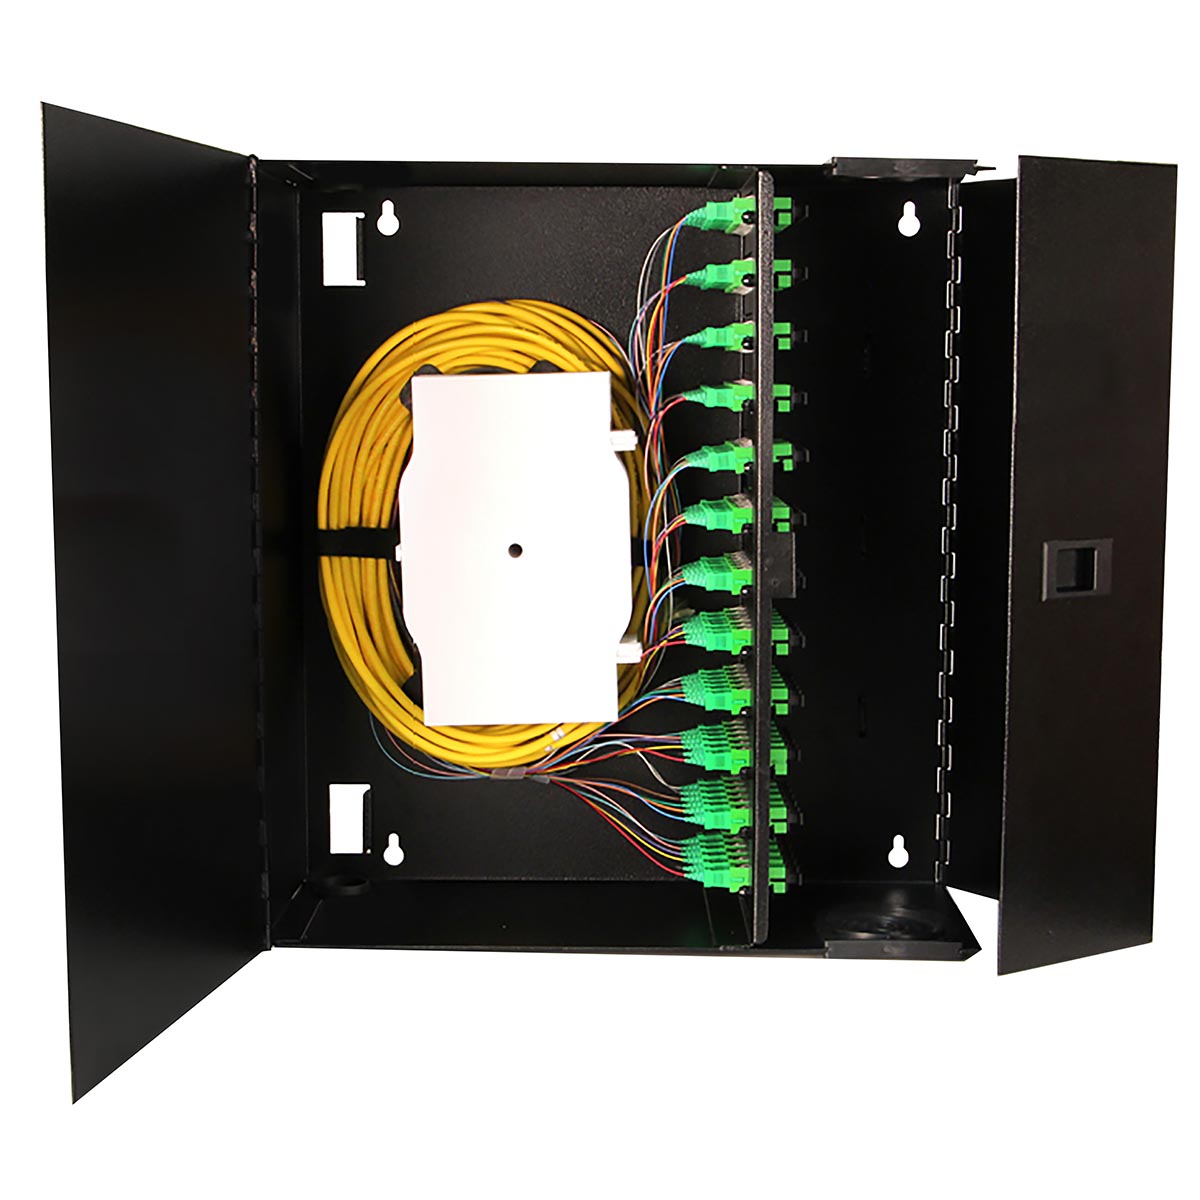 CLEERLINE SSF-Wall Mount Fiber Distribution Unit, Small, Split Door, with Lock, Adapter Plate Capable